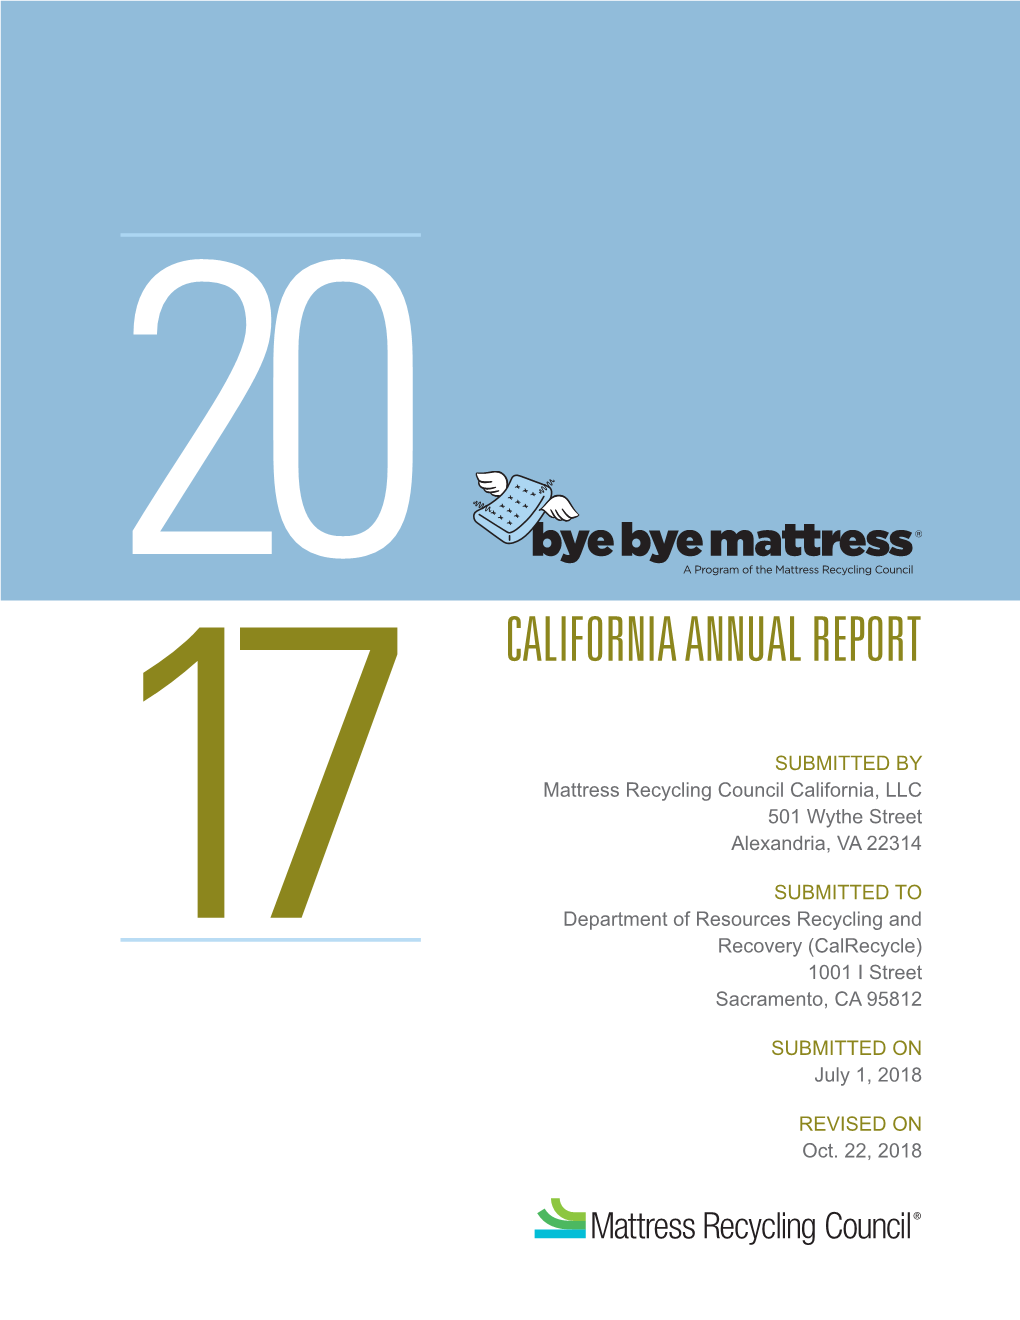 2017 California Annual Report